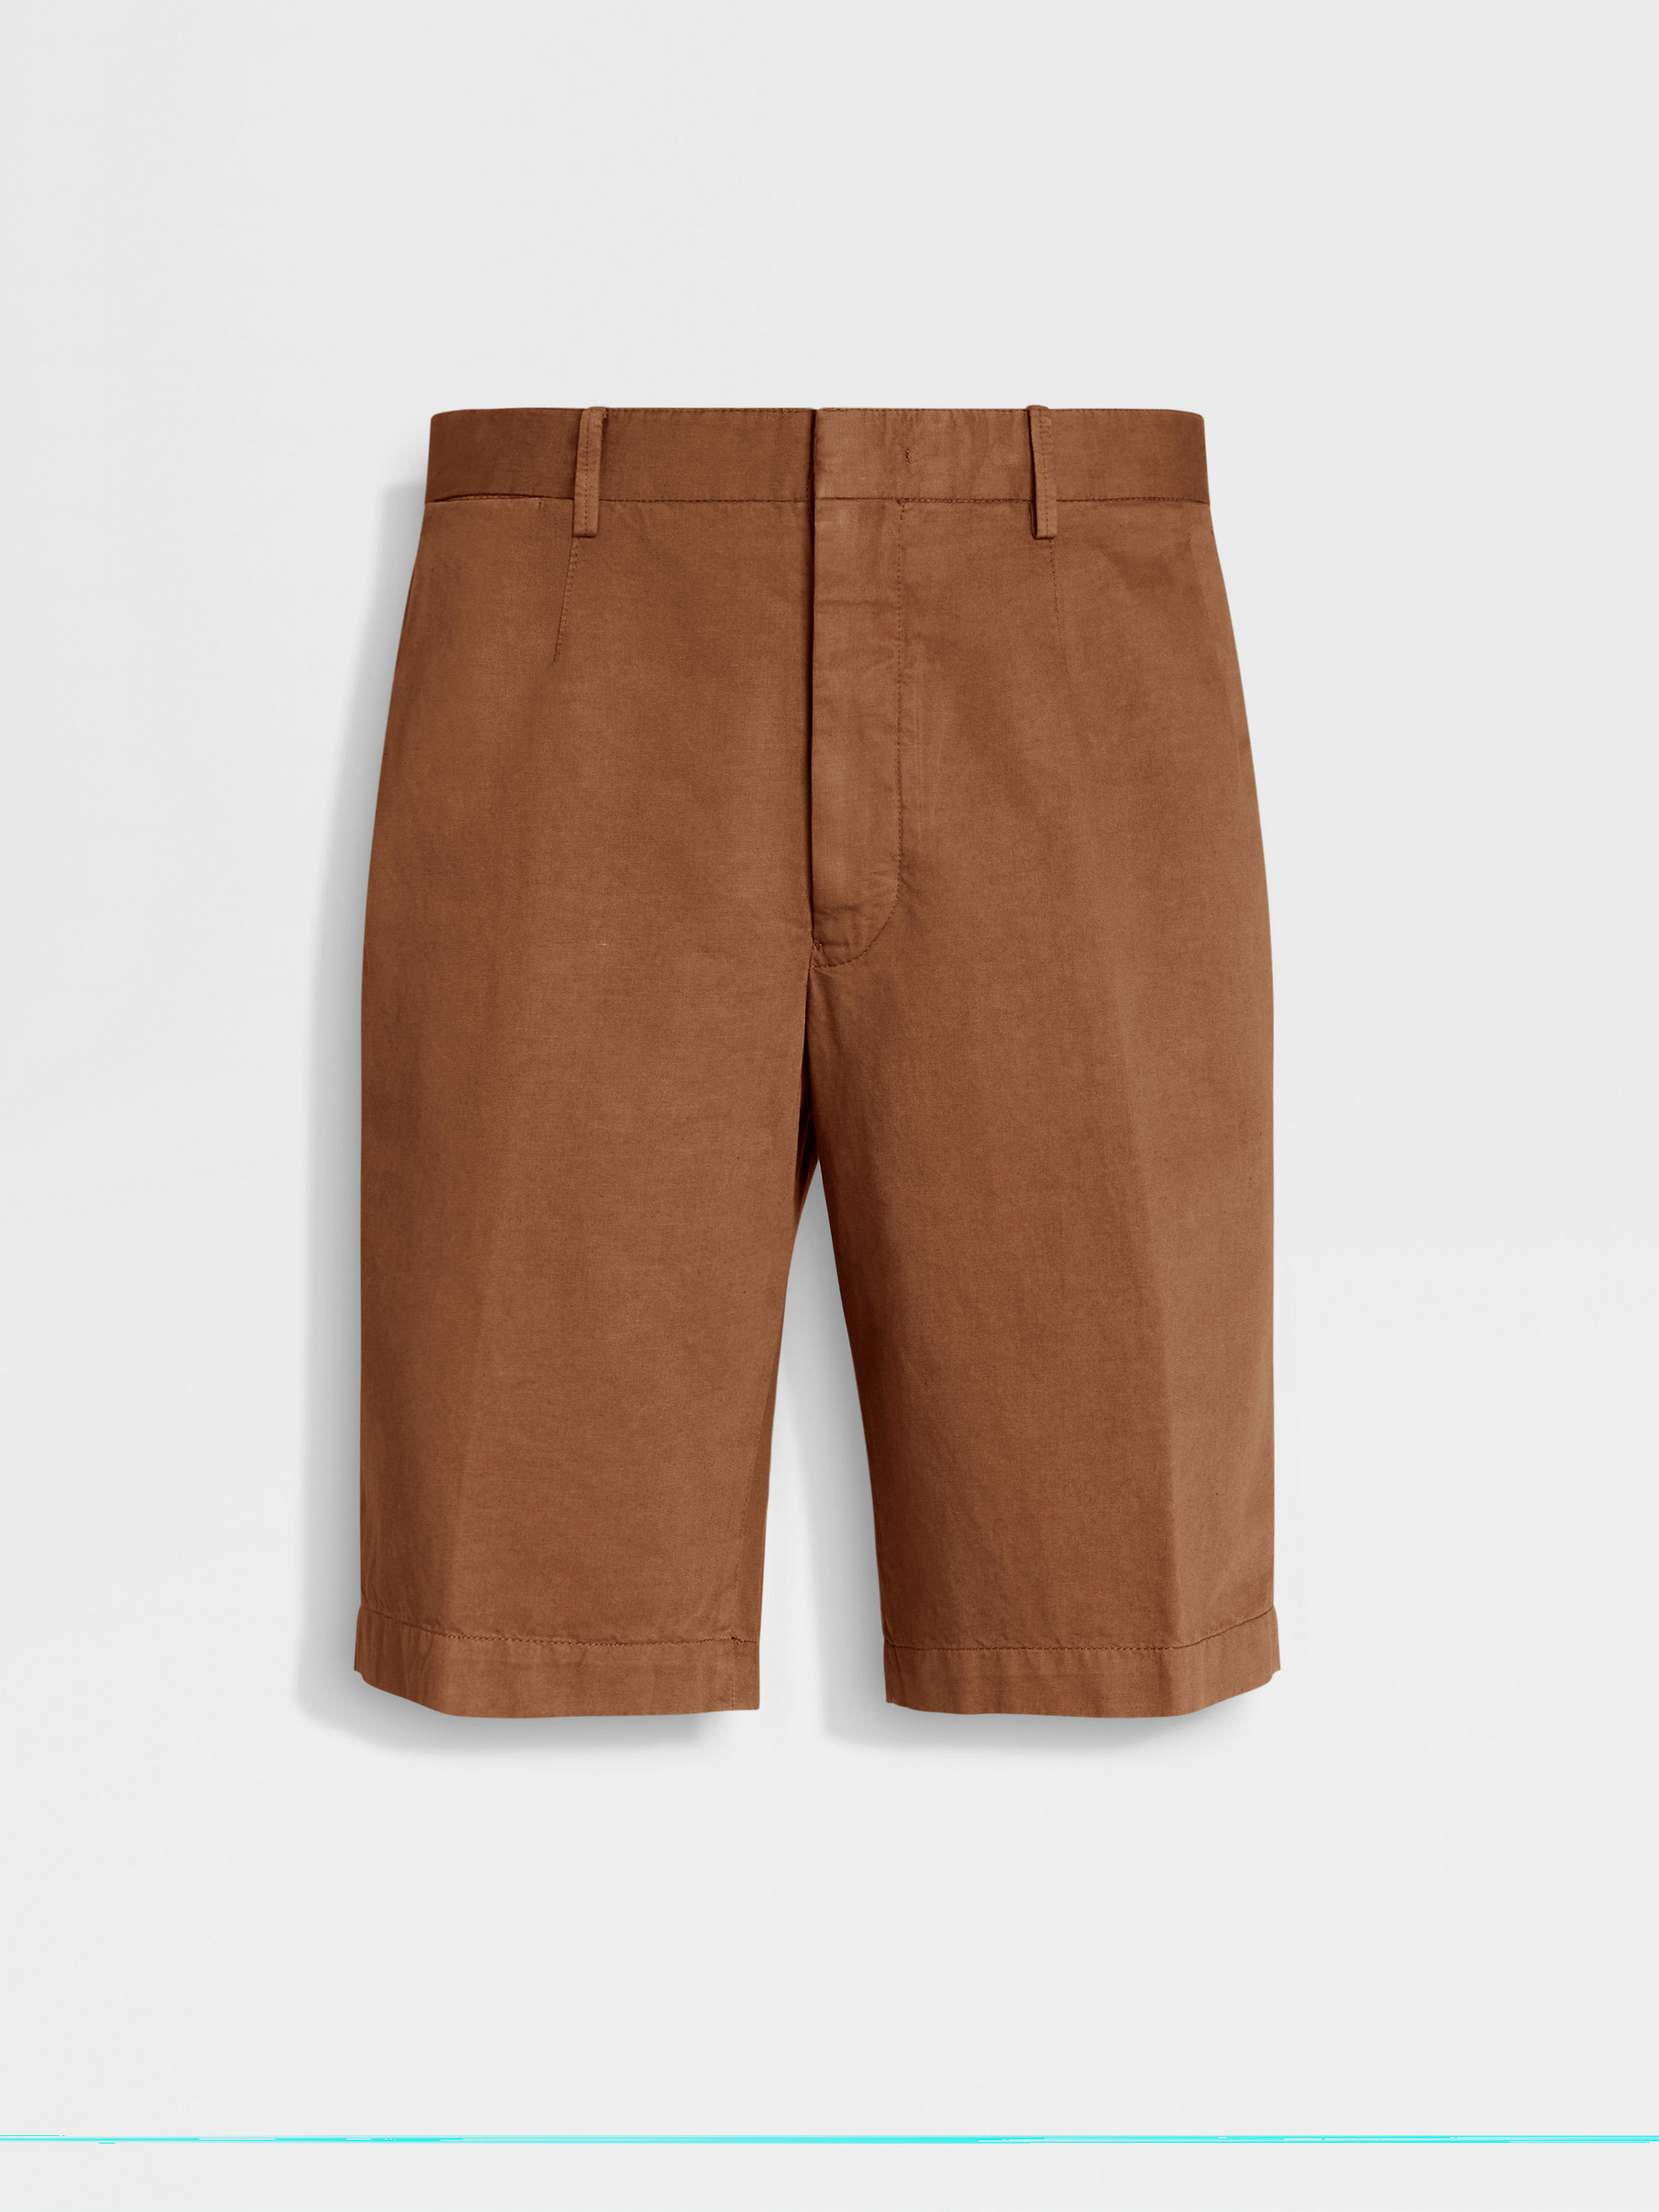 Dark Foliage Summer Chino Cotton and Linen Short Pants